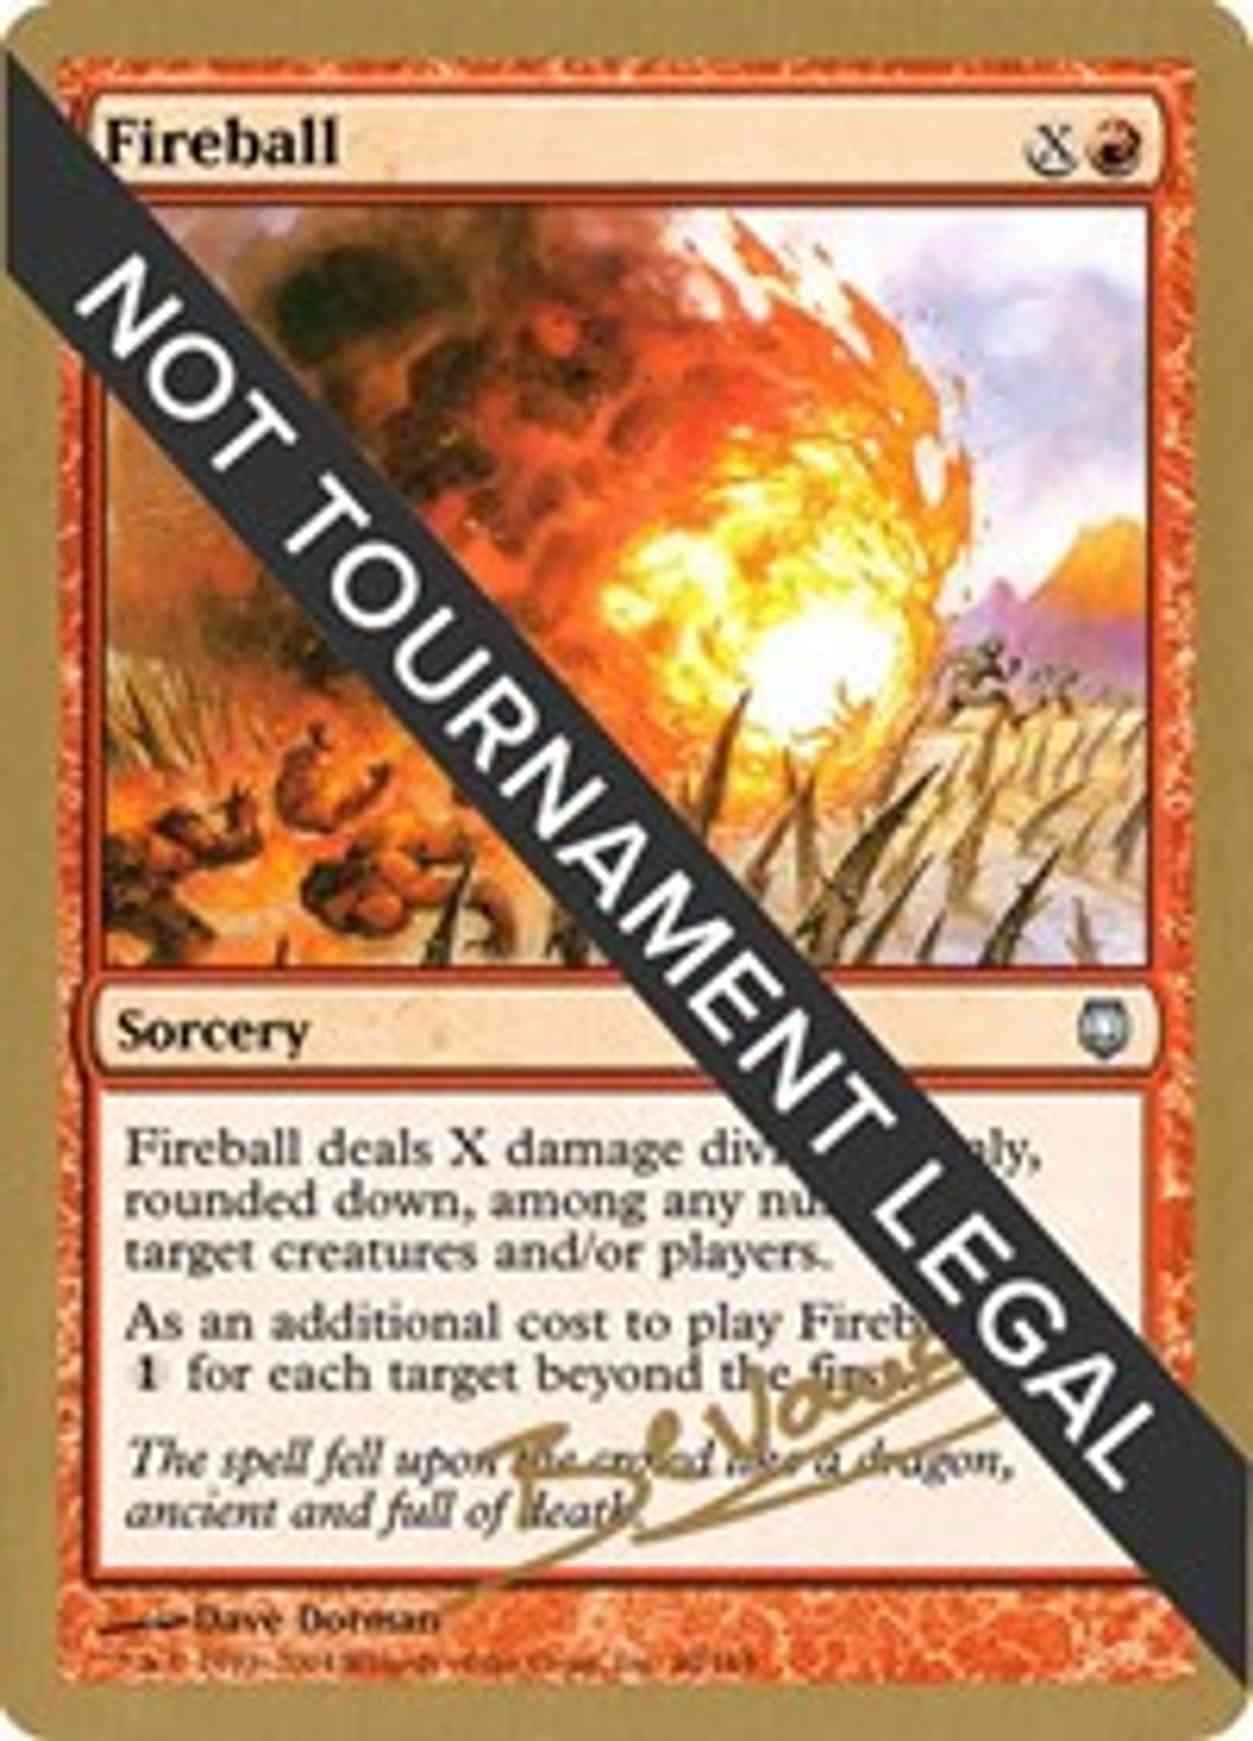 Fireball - 2004 Manuel Bevand (DST) magic card front